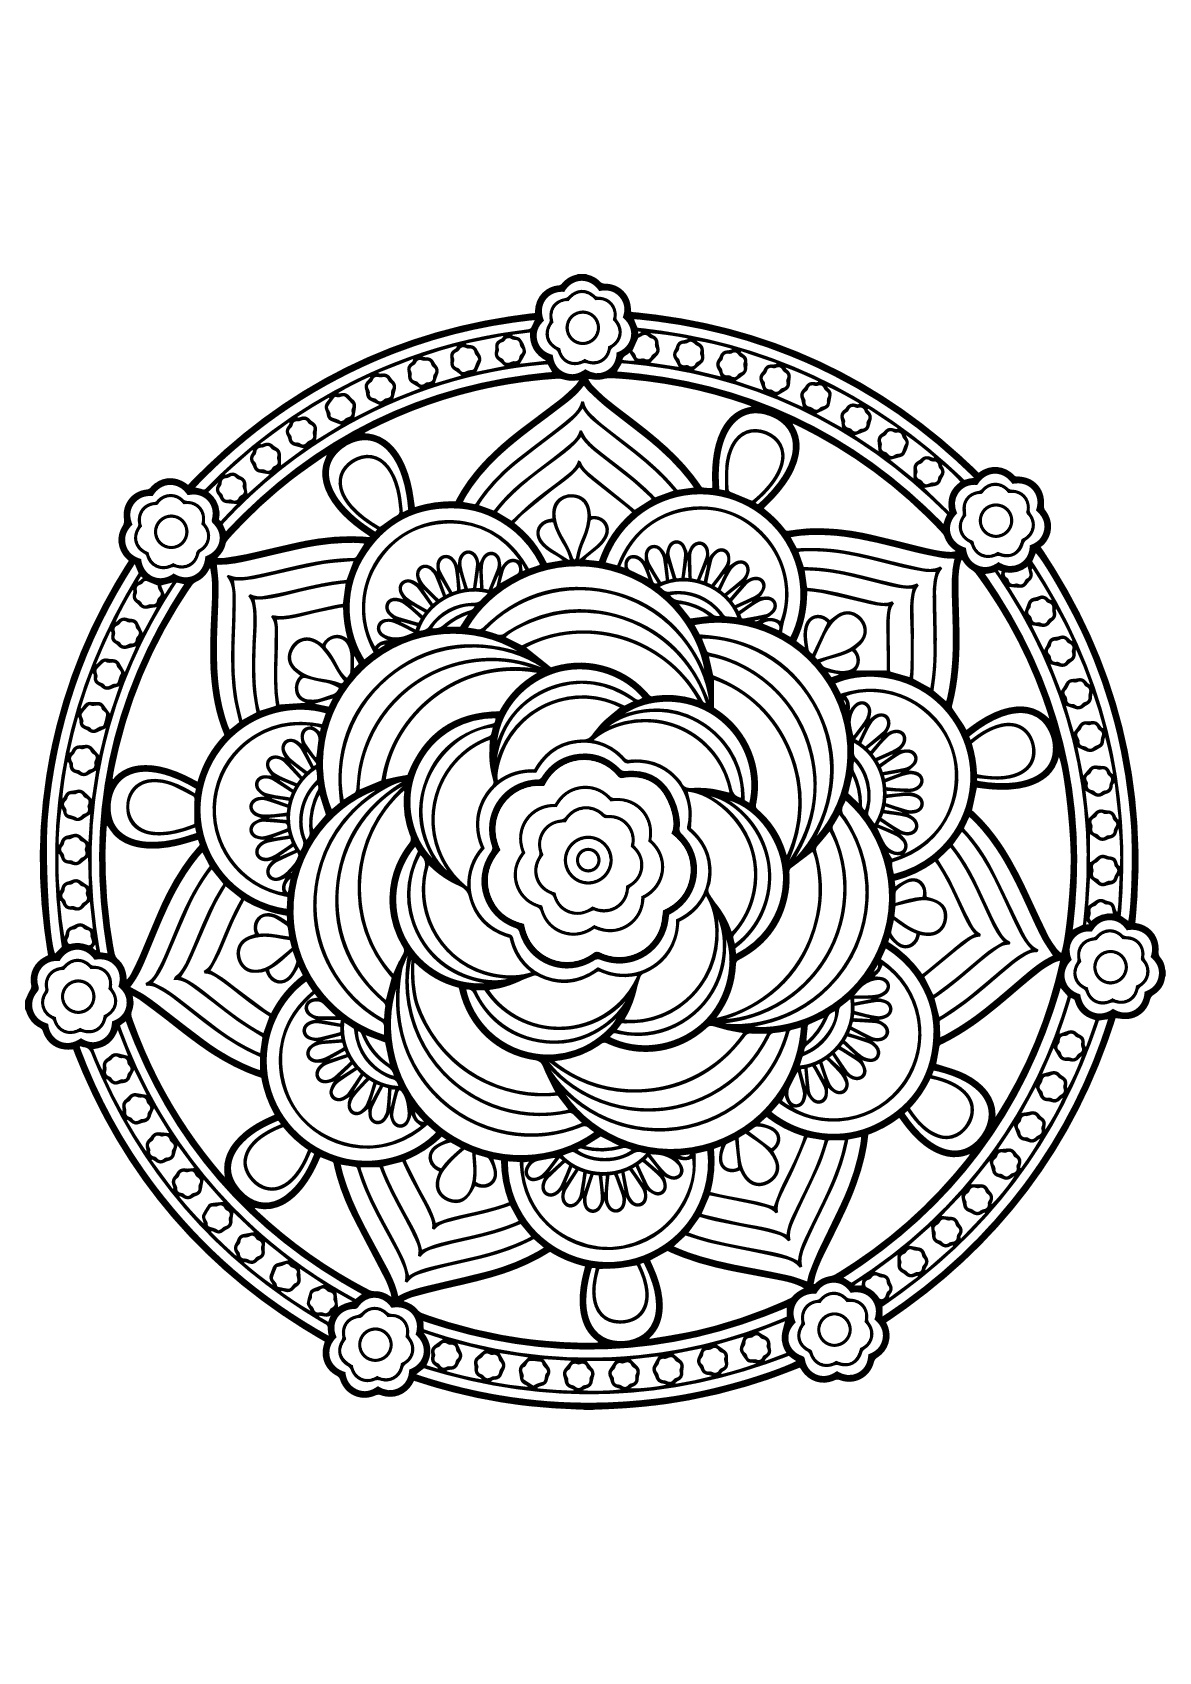 Mandala con motivos florales de Free Coloring book for adults